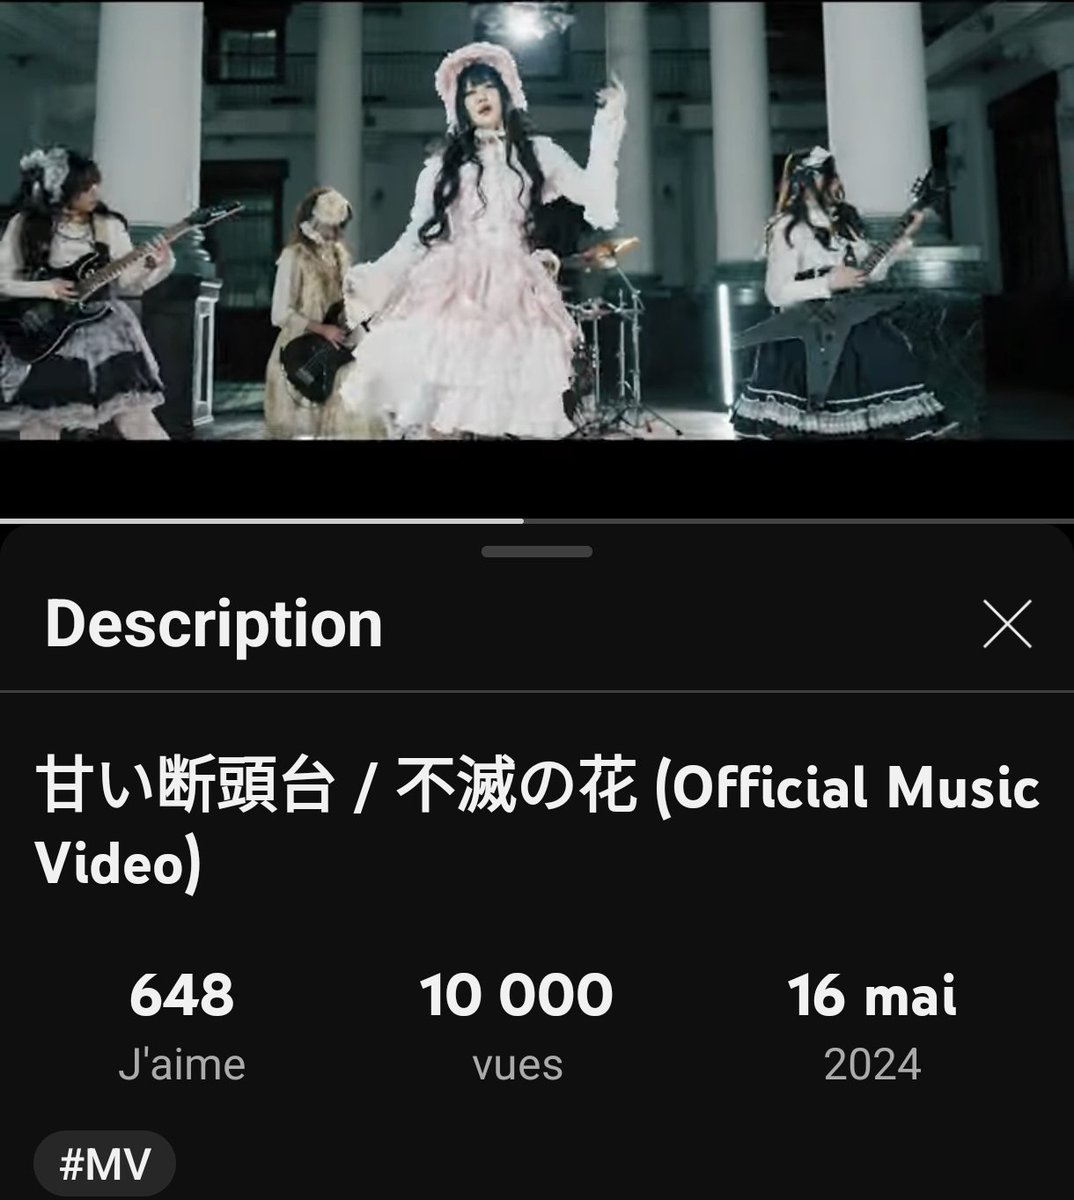 #NowWatching
#YoutubeVideo
#musicvideo
#NewVideo
#FemaleMetalBand
#JMetal
#Japanesemetal
#HeavyMetal
#甘い断頭台
#甘断
#甘党
#AMAIDANTOUDAI

Congratulations for the 10.000 views!!! 🎉🌹
👏👏👏🤘🤍🩸